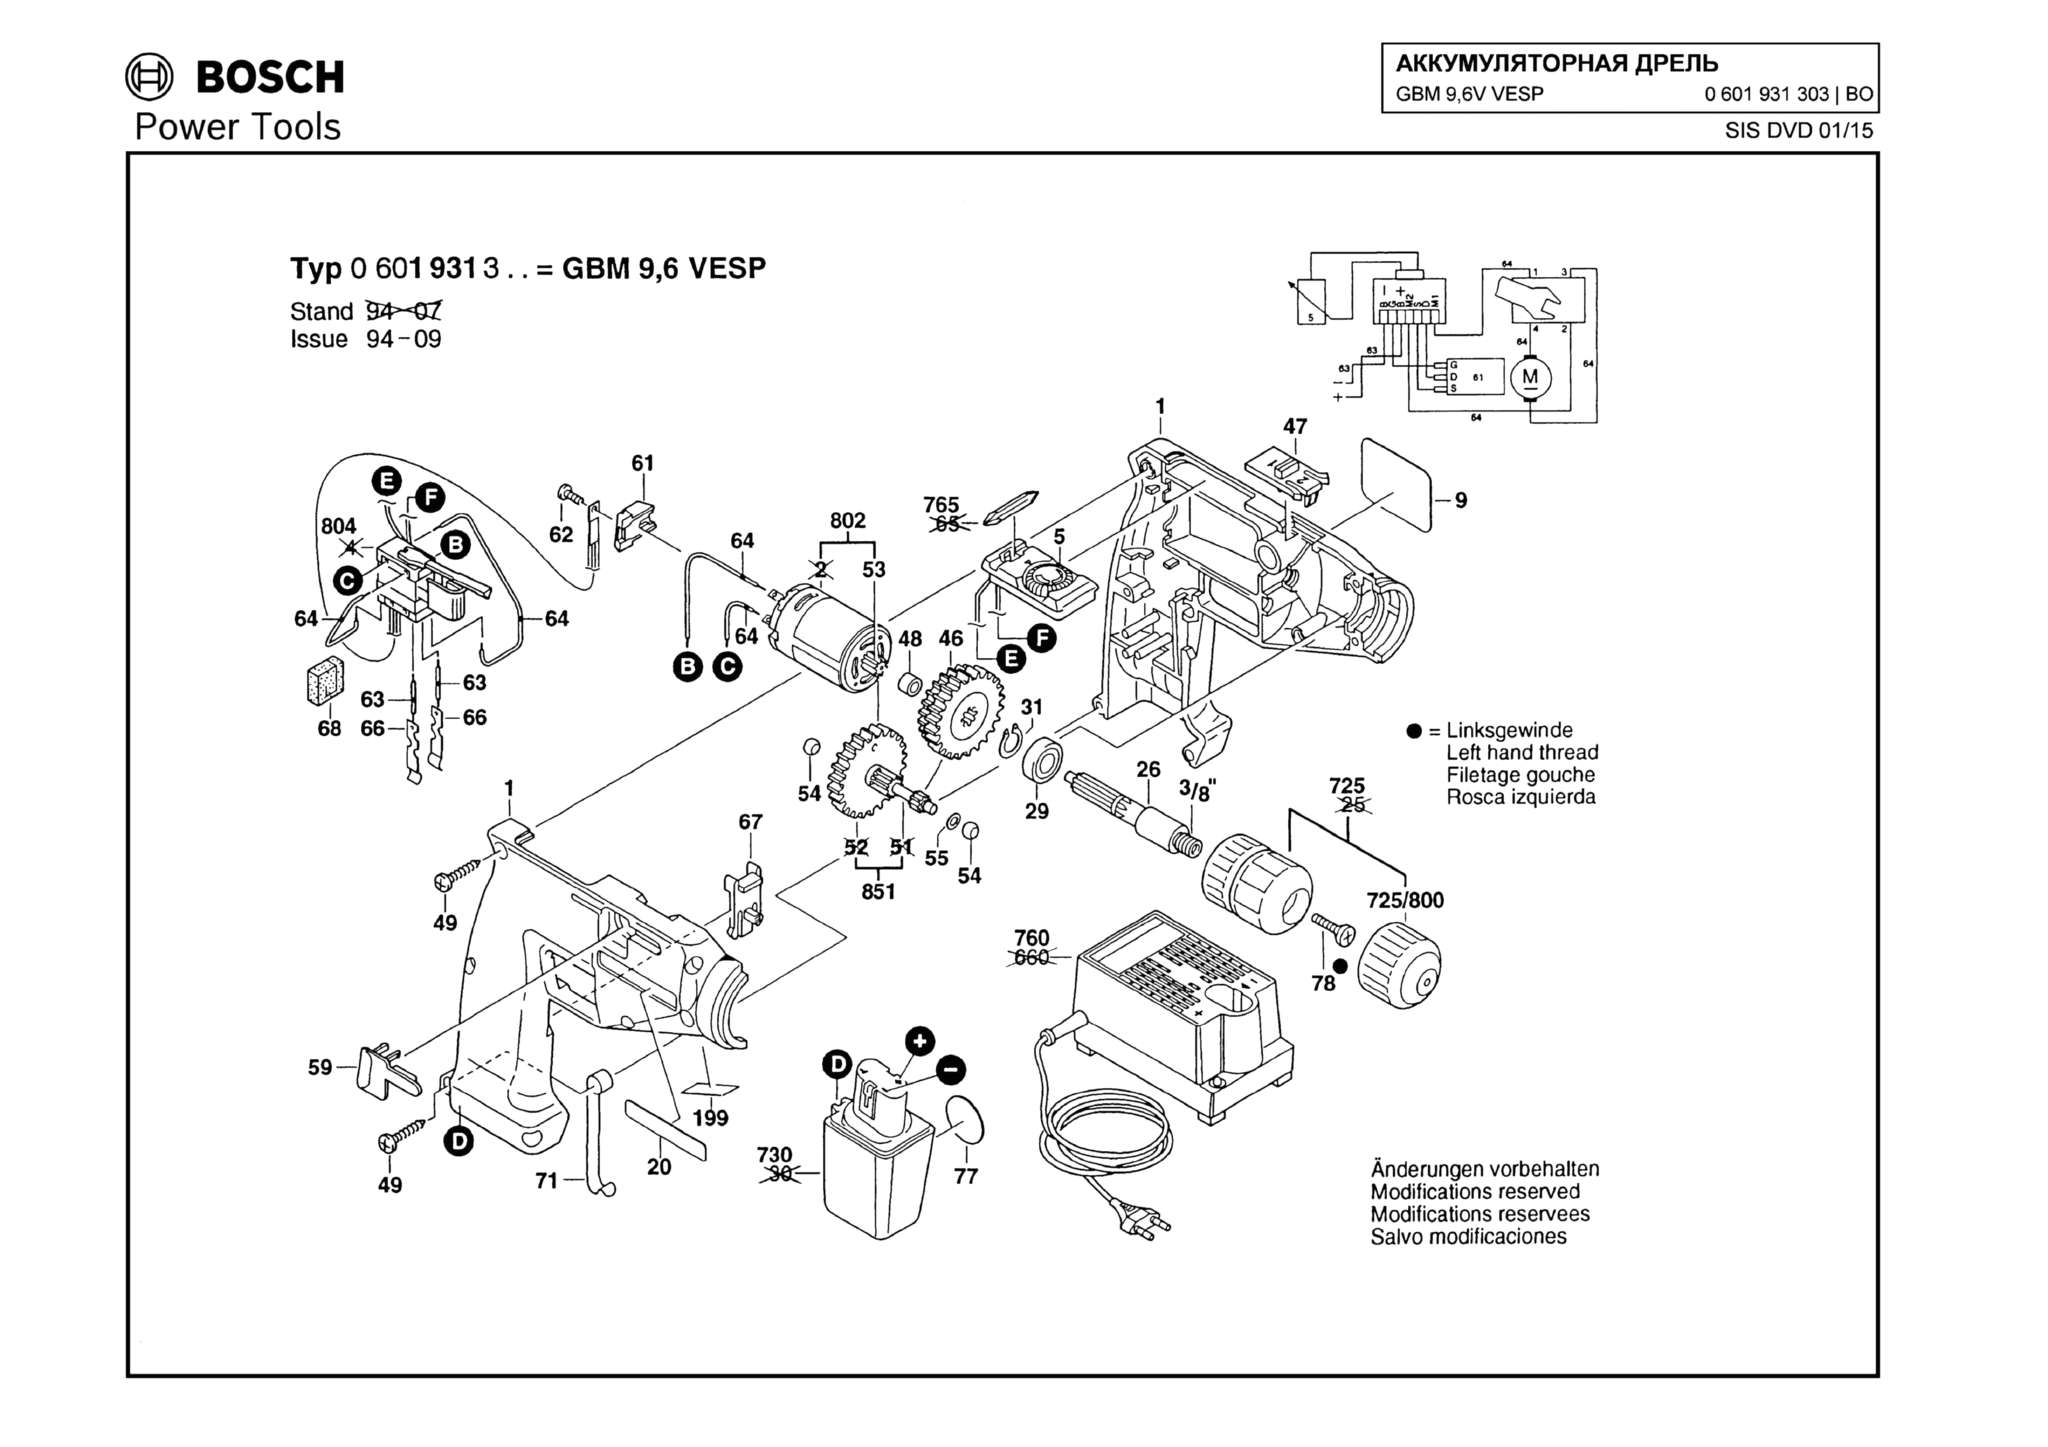 Запчасти, схема и деталировка Bosch GBM 9,6V VESP (ТИП 0601931303)